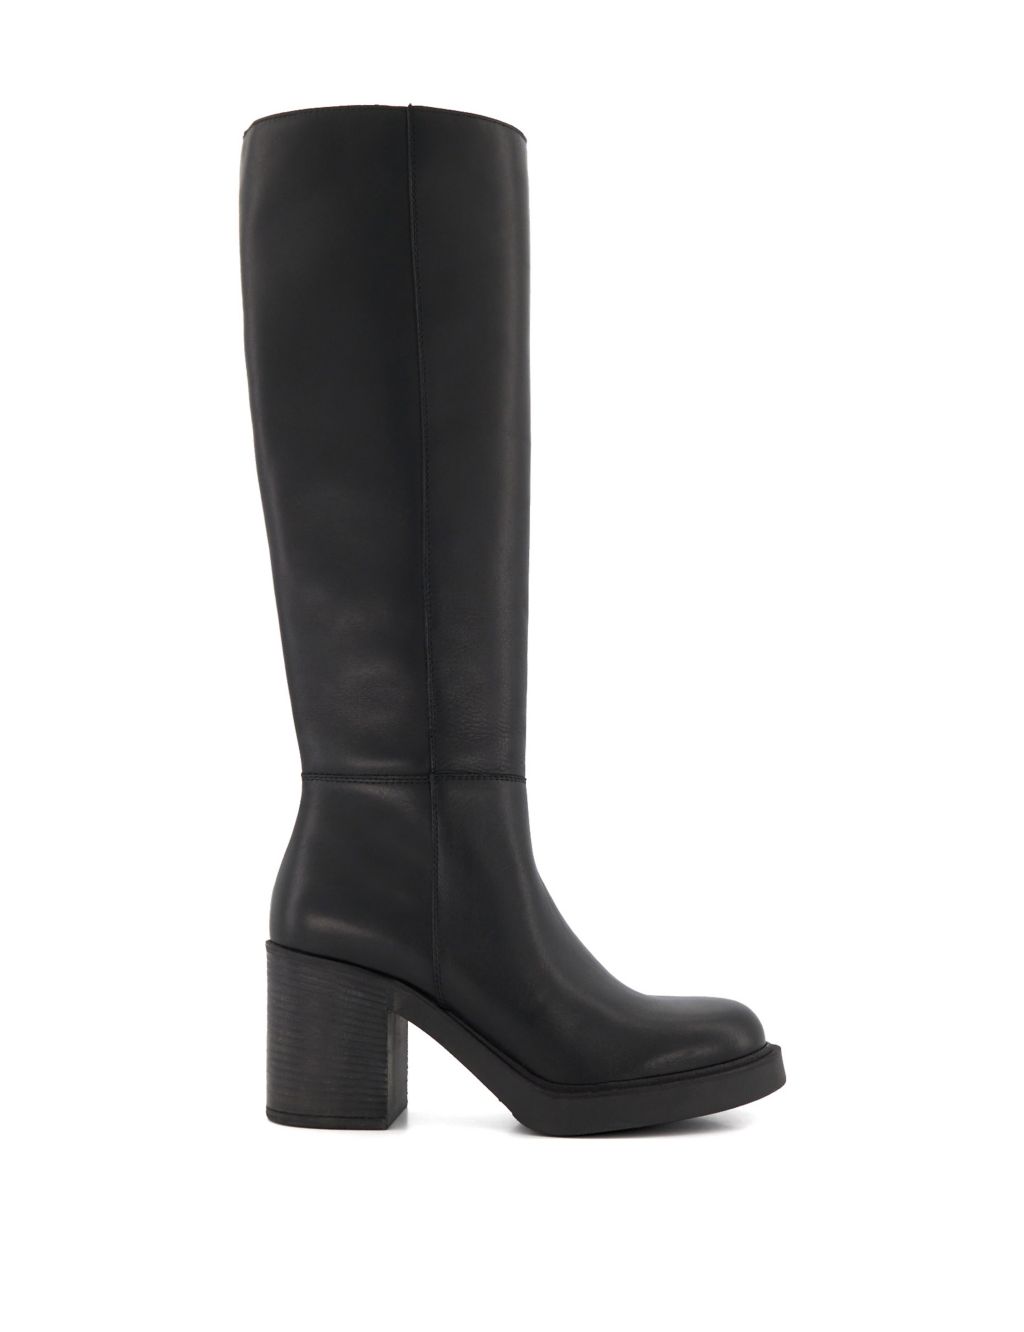 Leather Block Heel Knee High Boots | Dune London | M&S